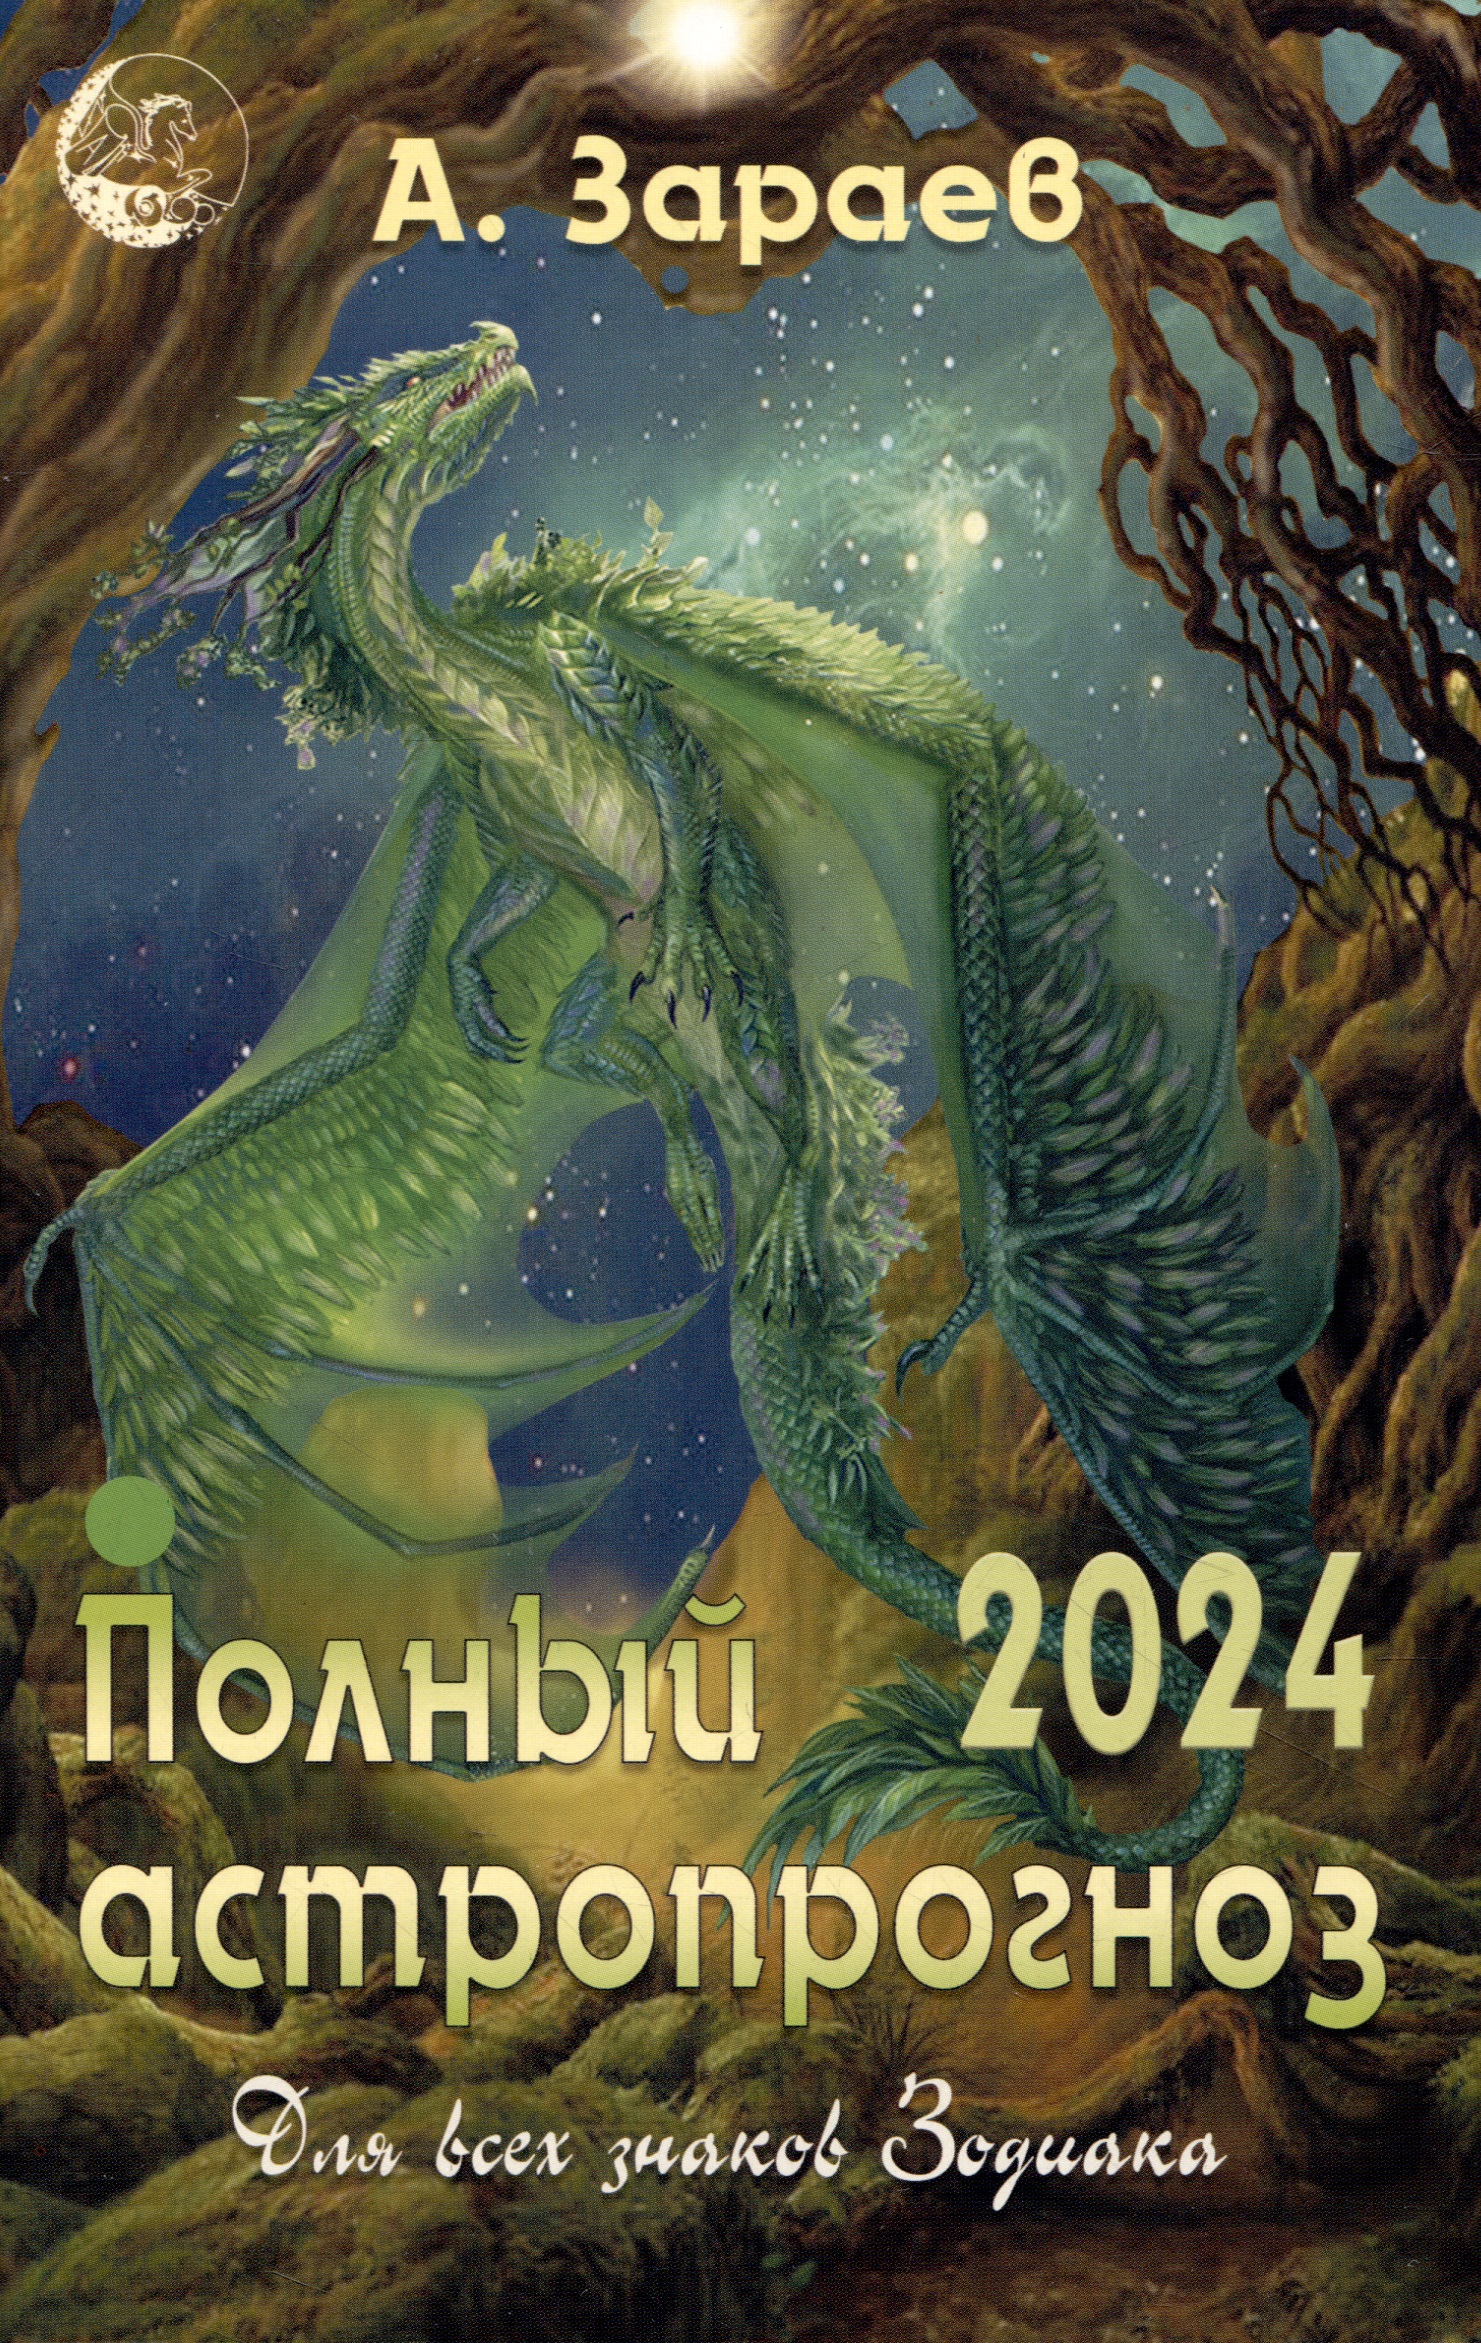 Полный астропрогноз для всех знаков зодиака 2024 (м) Зараев зараев александр викторович полный астропрогноз для всех знаков зодиака на 2021 год